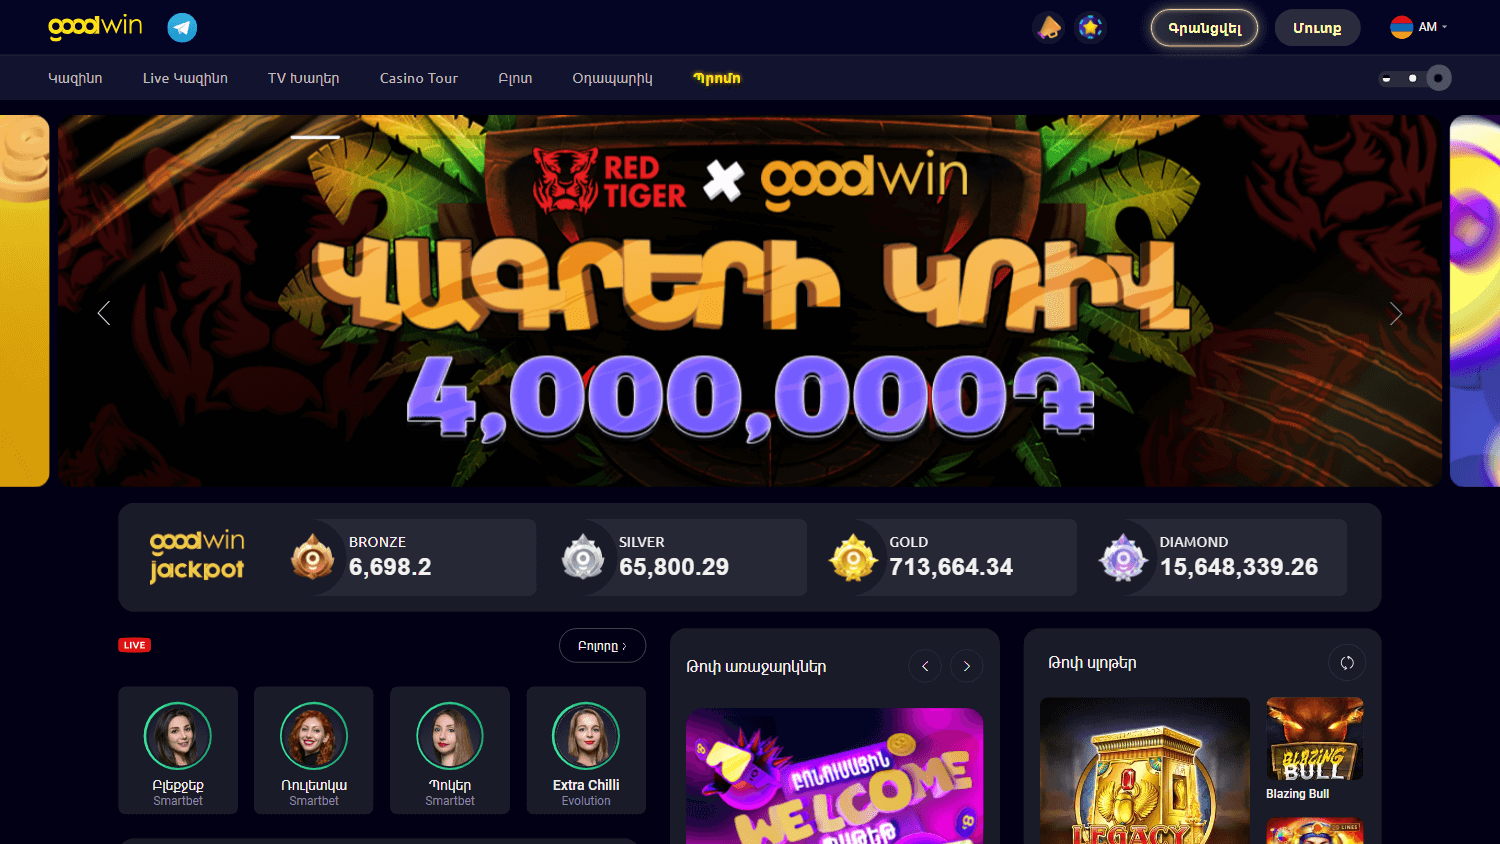 goodwin_casino_homepage_desktop